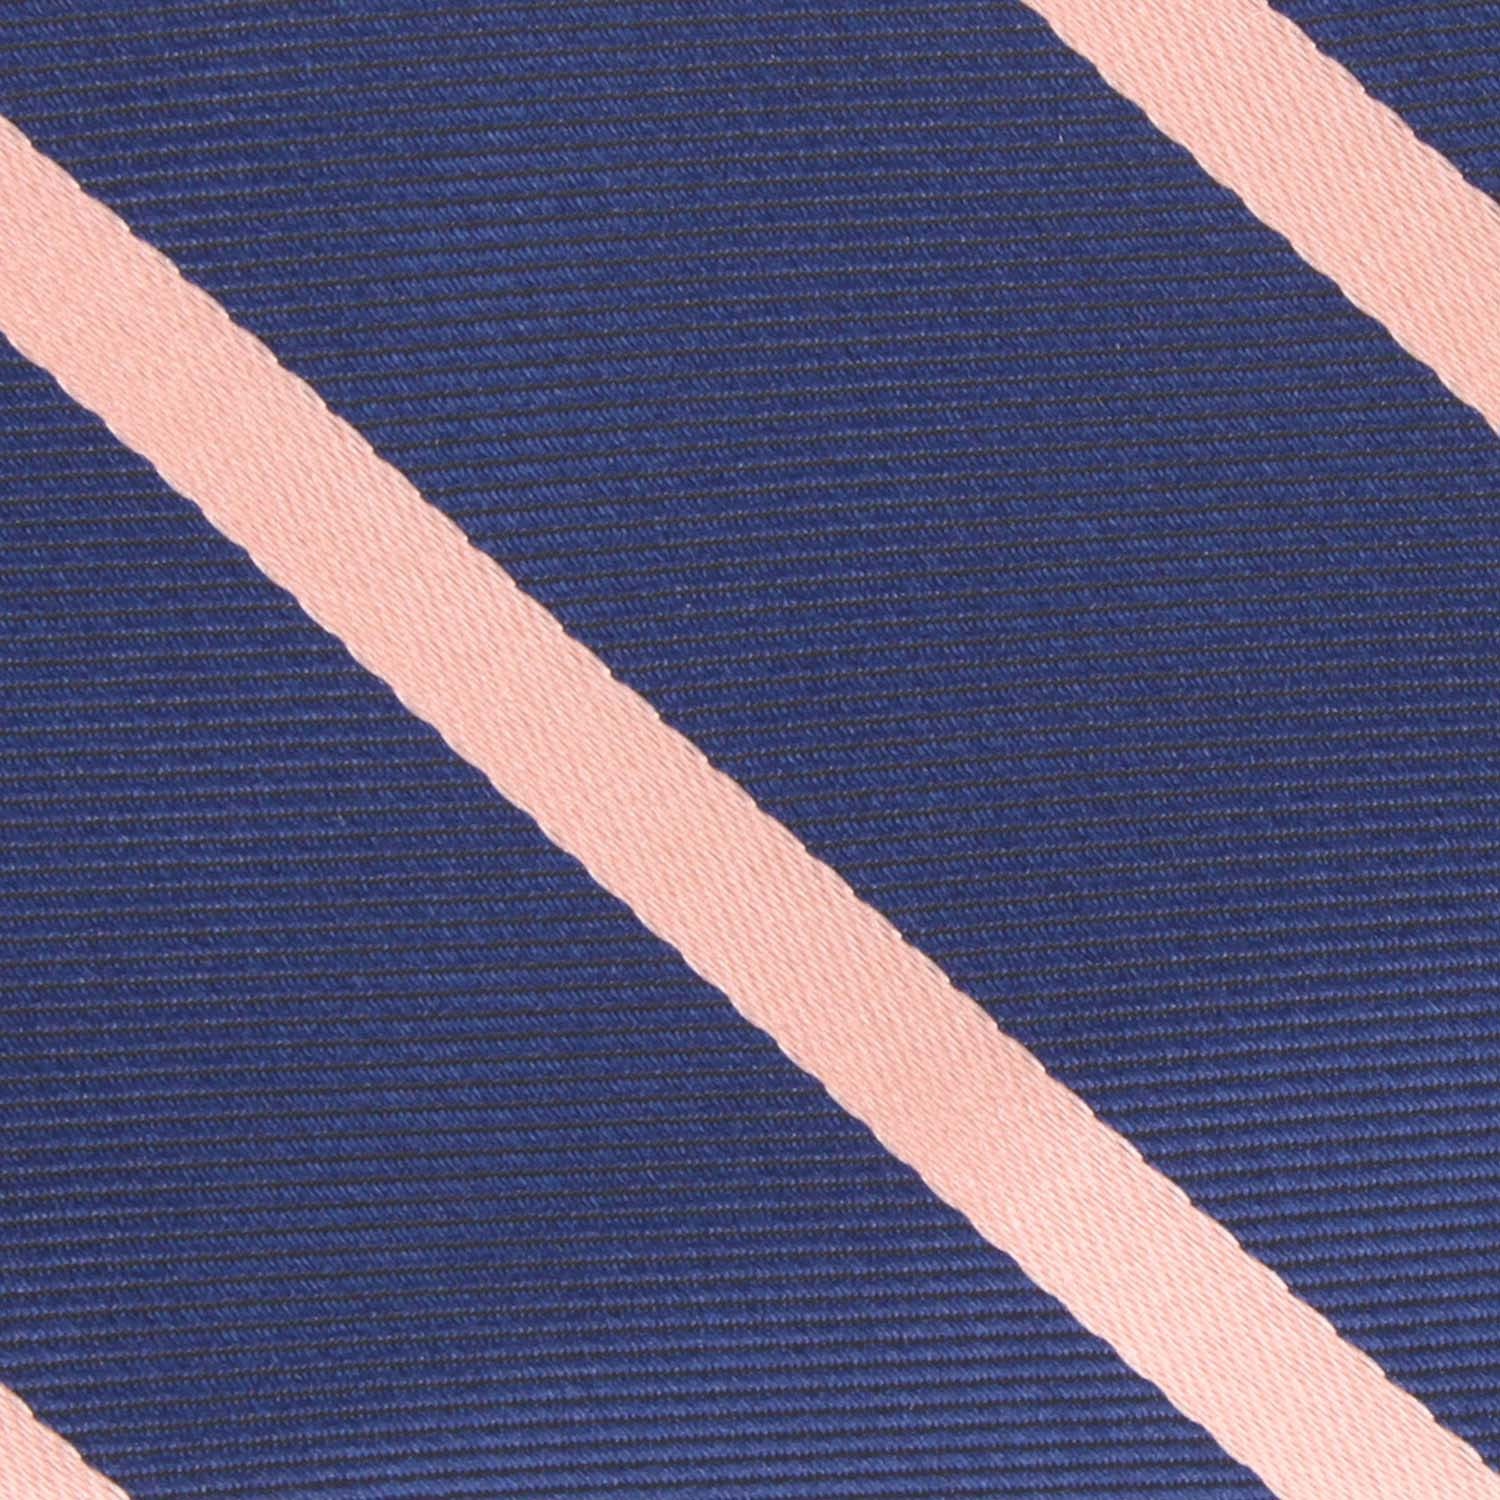 Navy Blue with Peach Stripes Fabric Skinny Tie M152